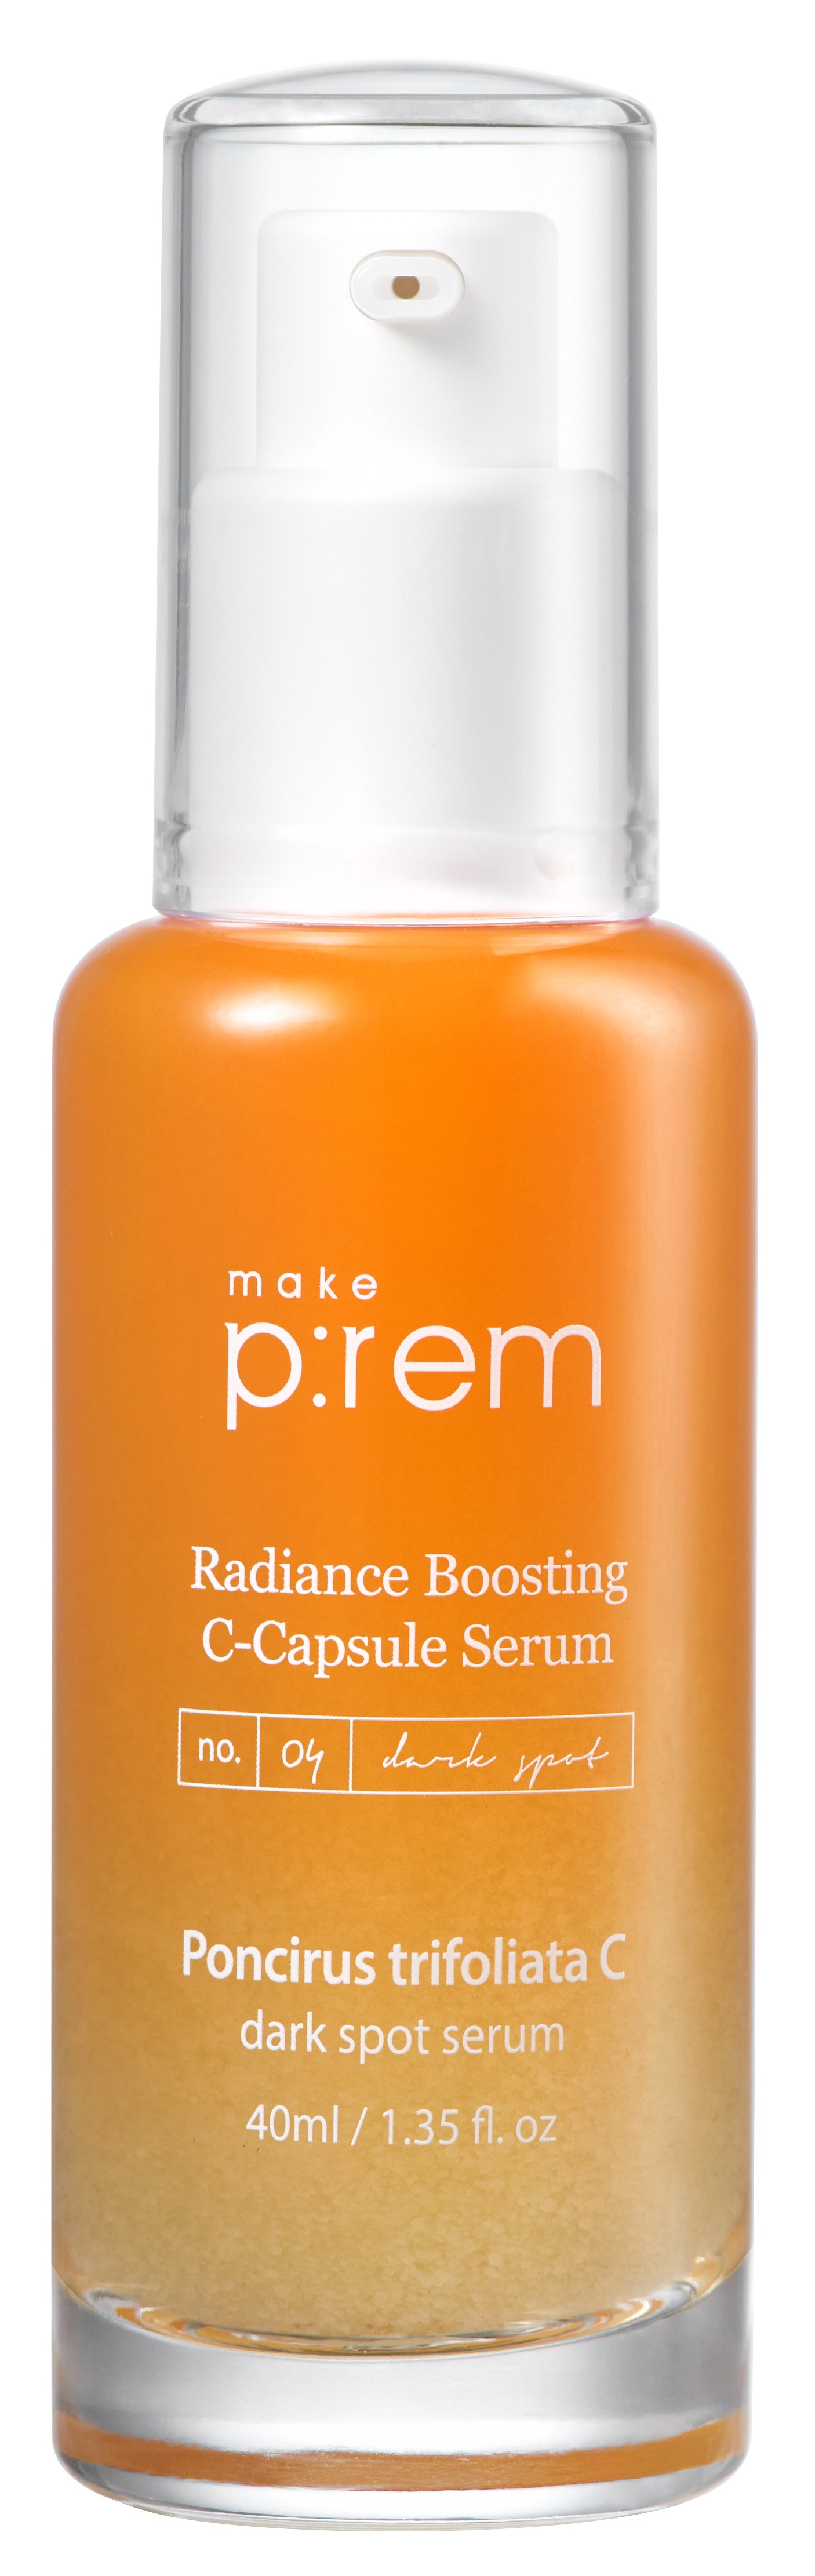 Make p:em Radiance Boosting C-Capsule Serum 40ml